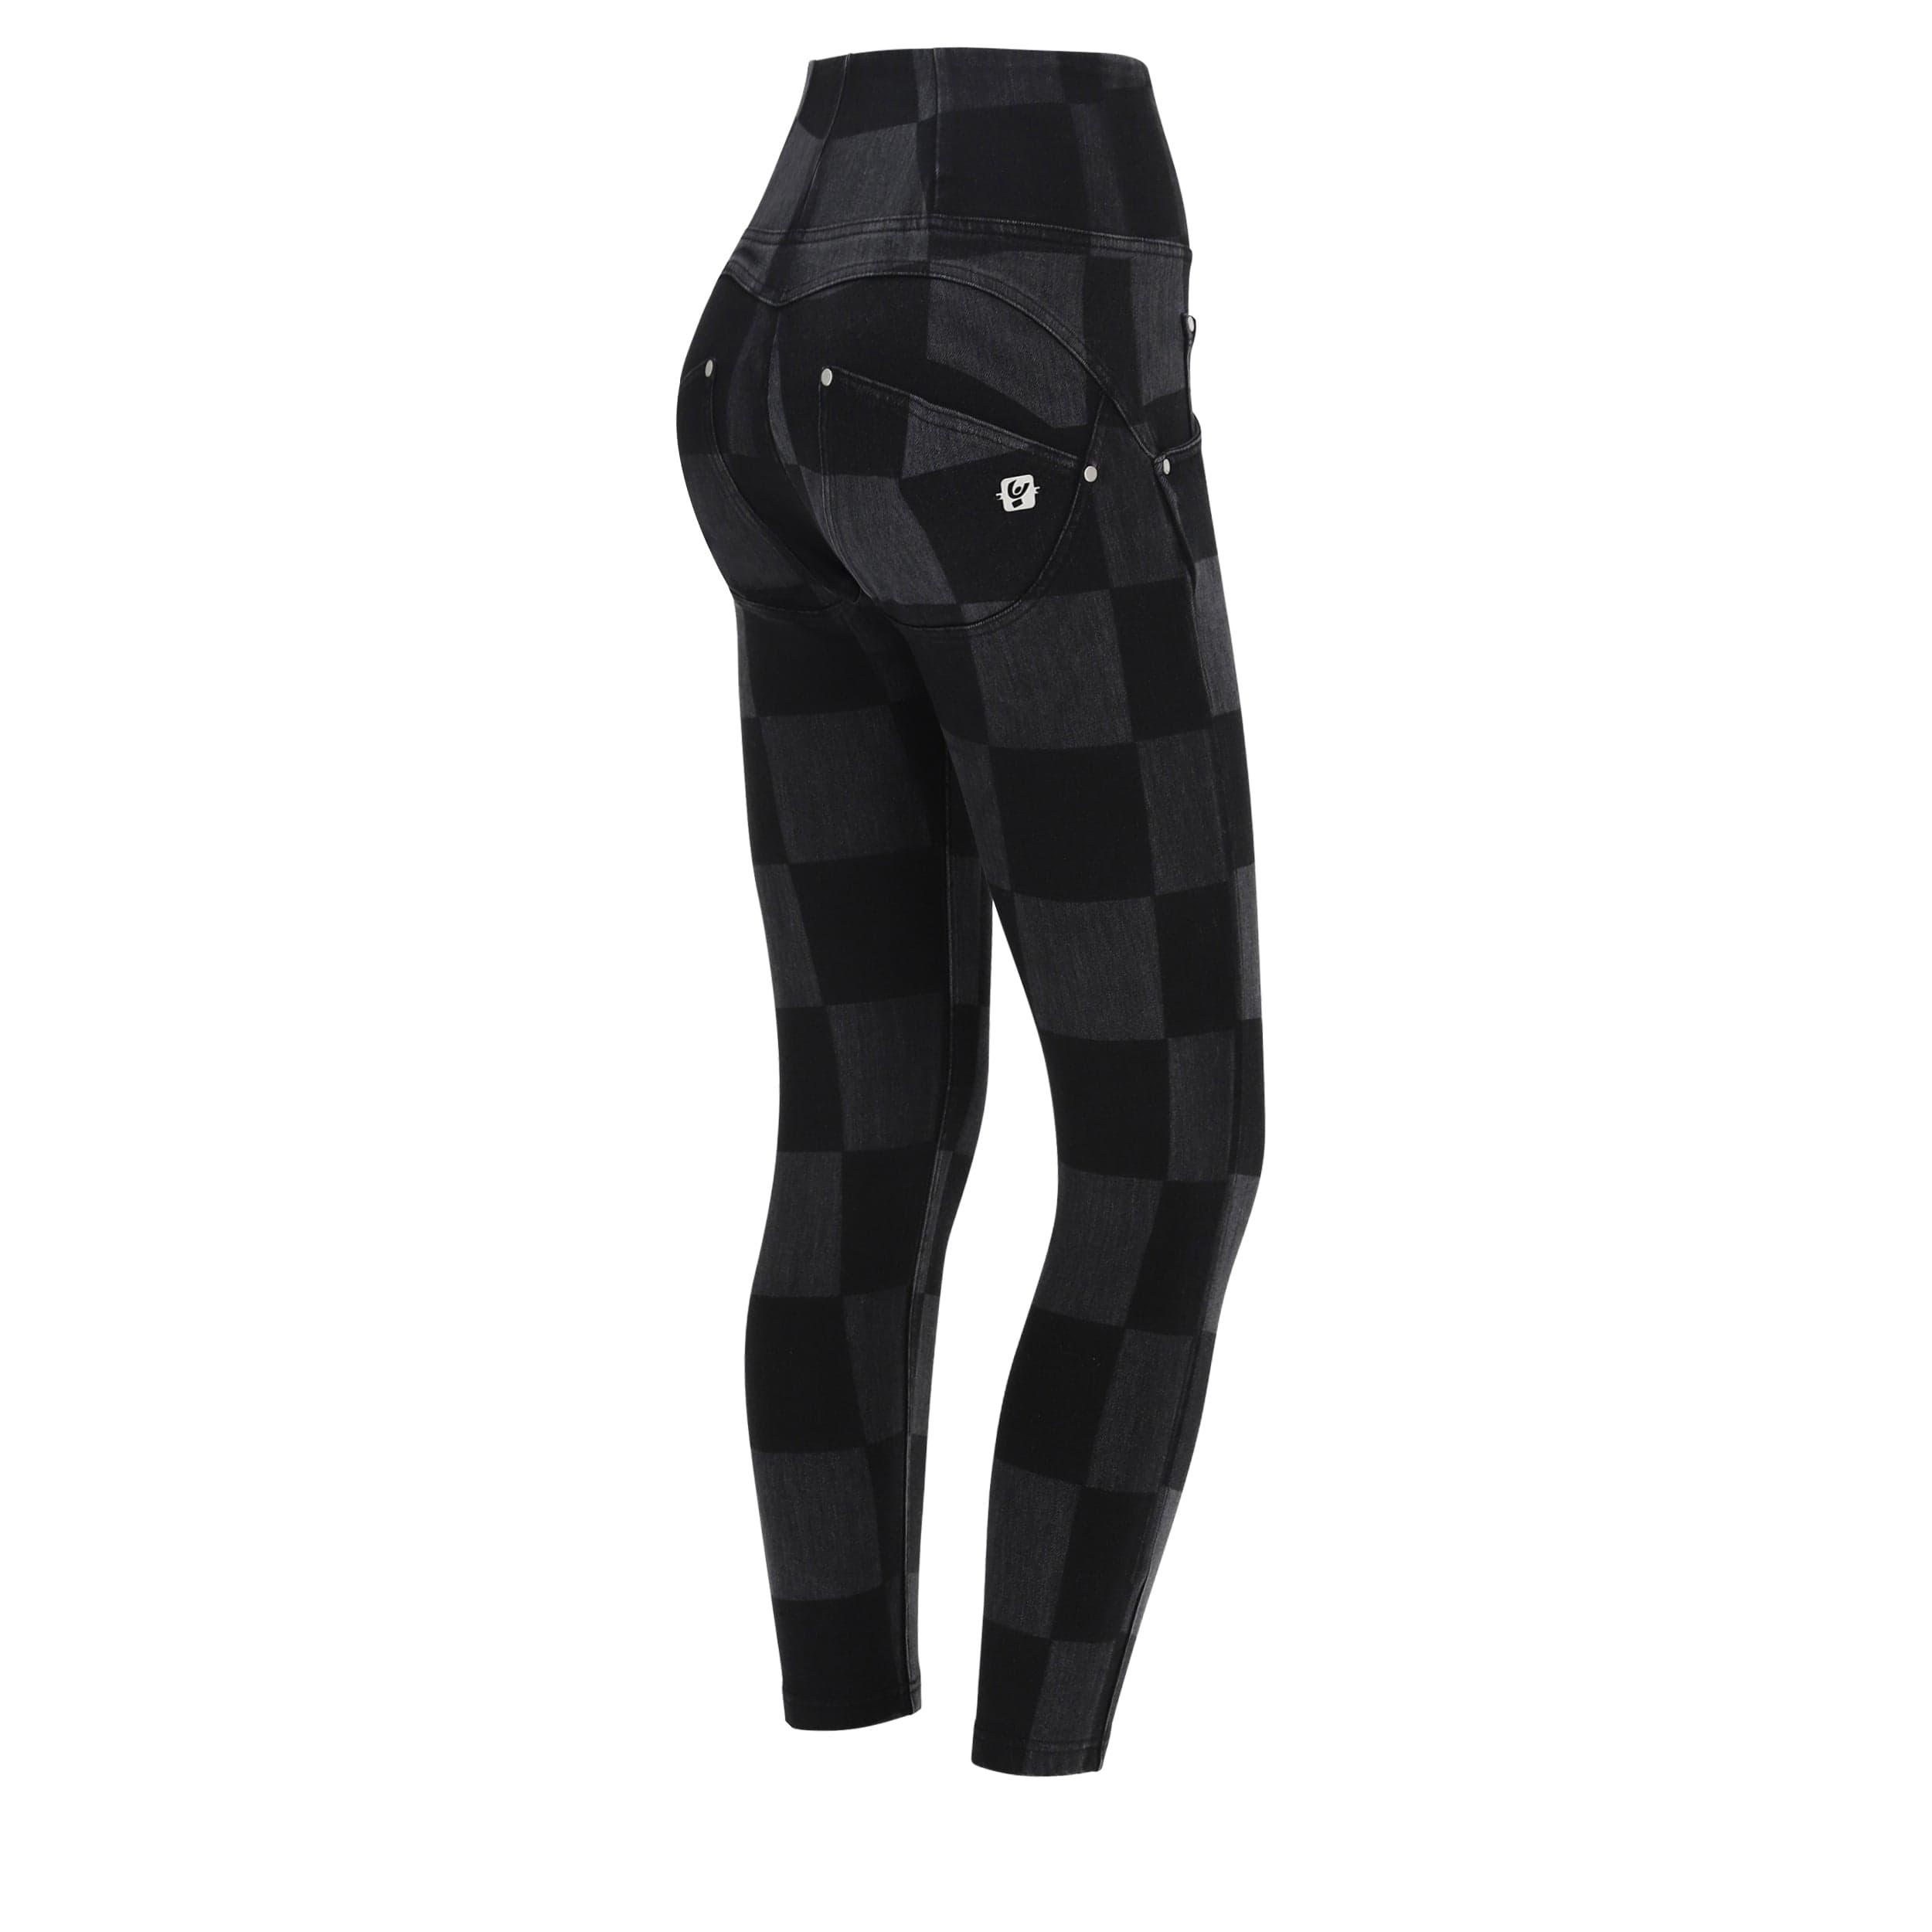 WR.UP® Snug Checkered Jeans - High Waisted - 7/8 Length - Black & Grey 1